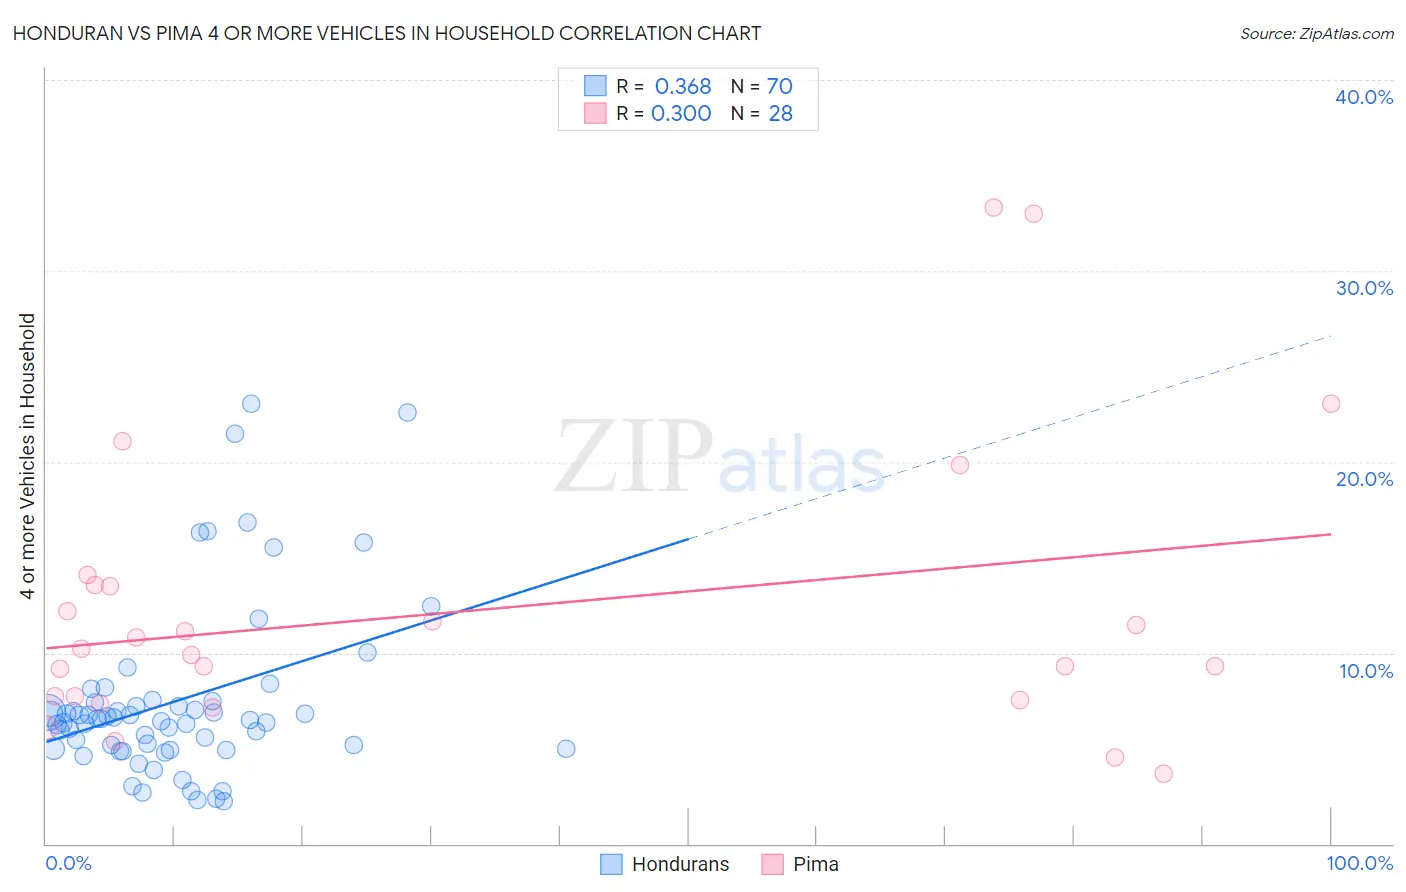 Honduran vs Pima 4 or more Vehicles in Household